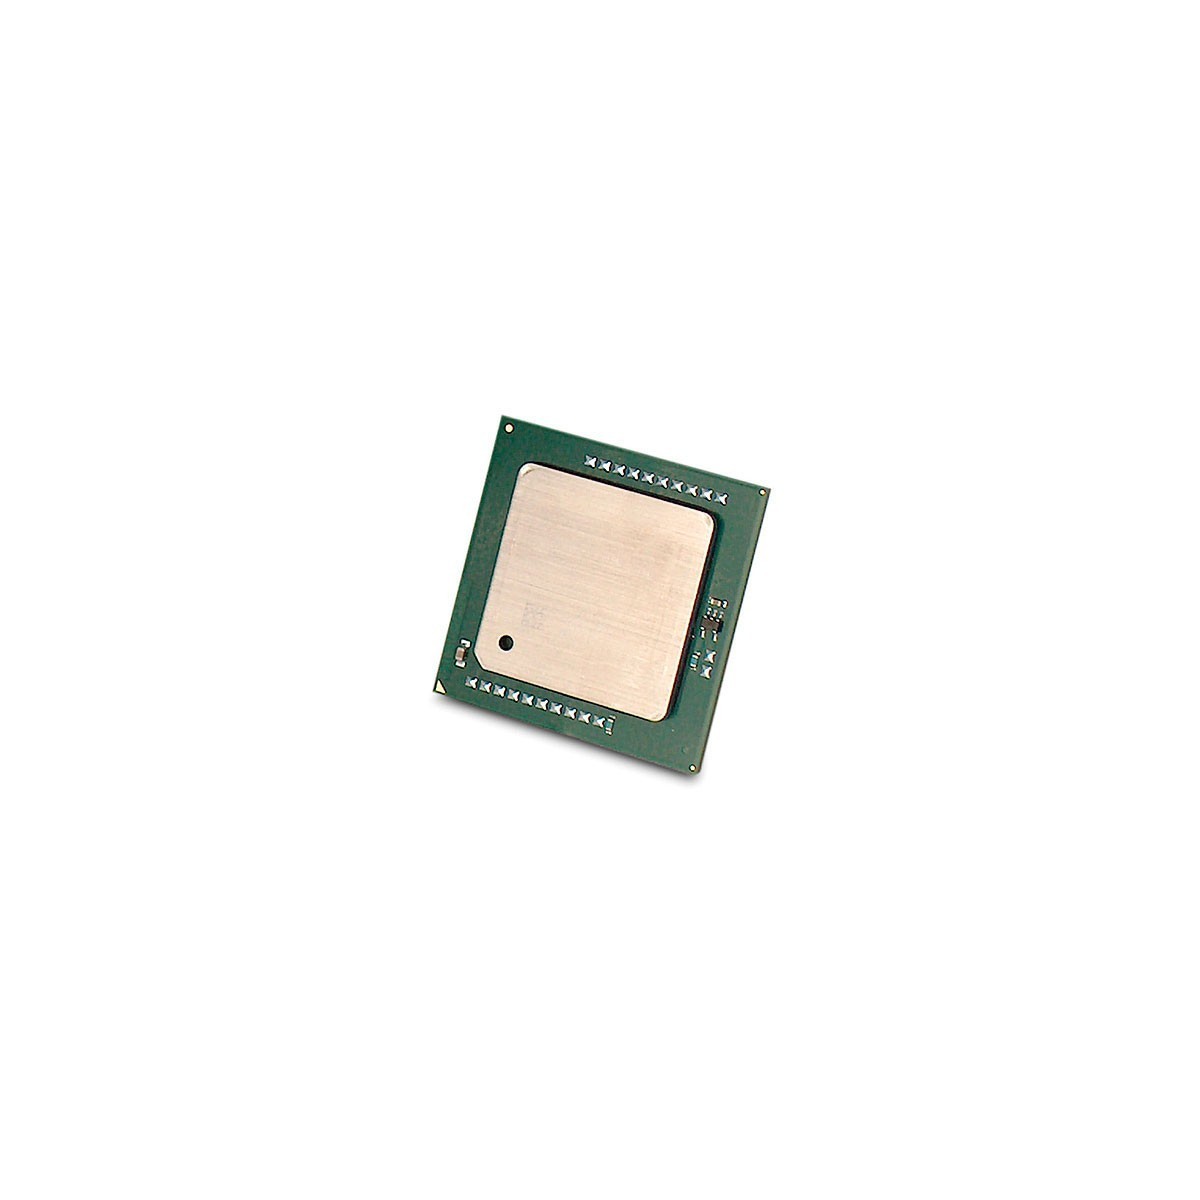 HPE DL360 G7 Intel Xeon E5606 Processor Kit - Intel® Xeon® 5000 Sequence - Socket B (LGA 1366) - PC - 32 nm - 2.13 GHz - E5606